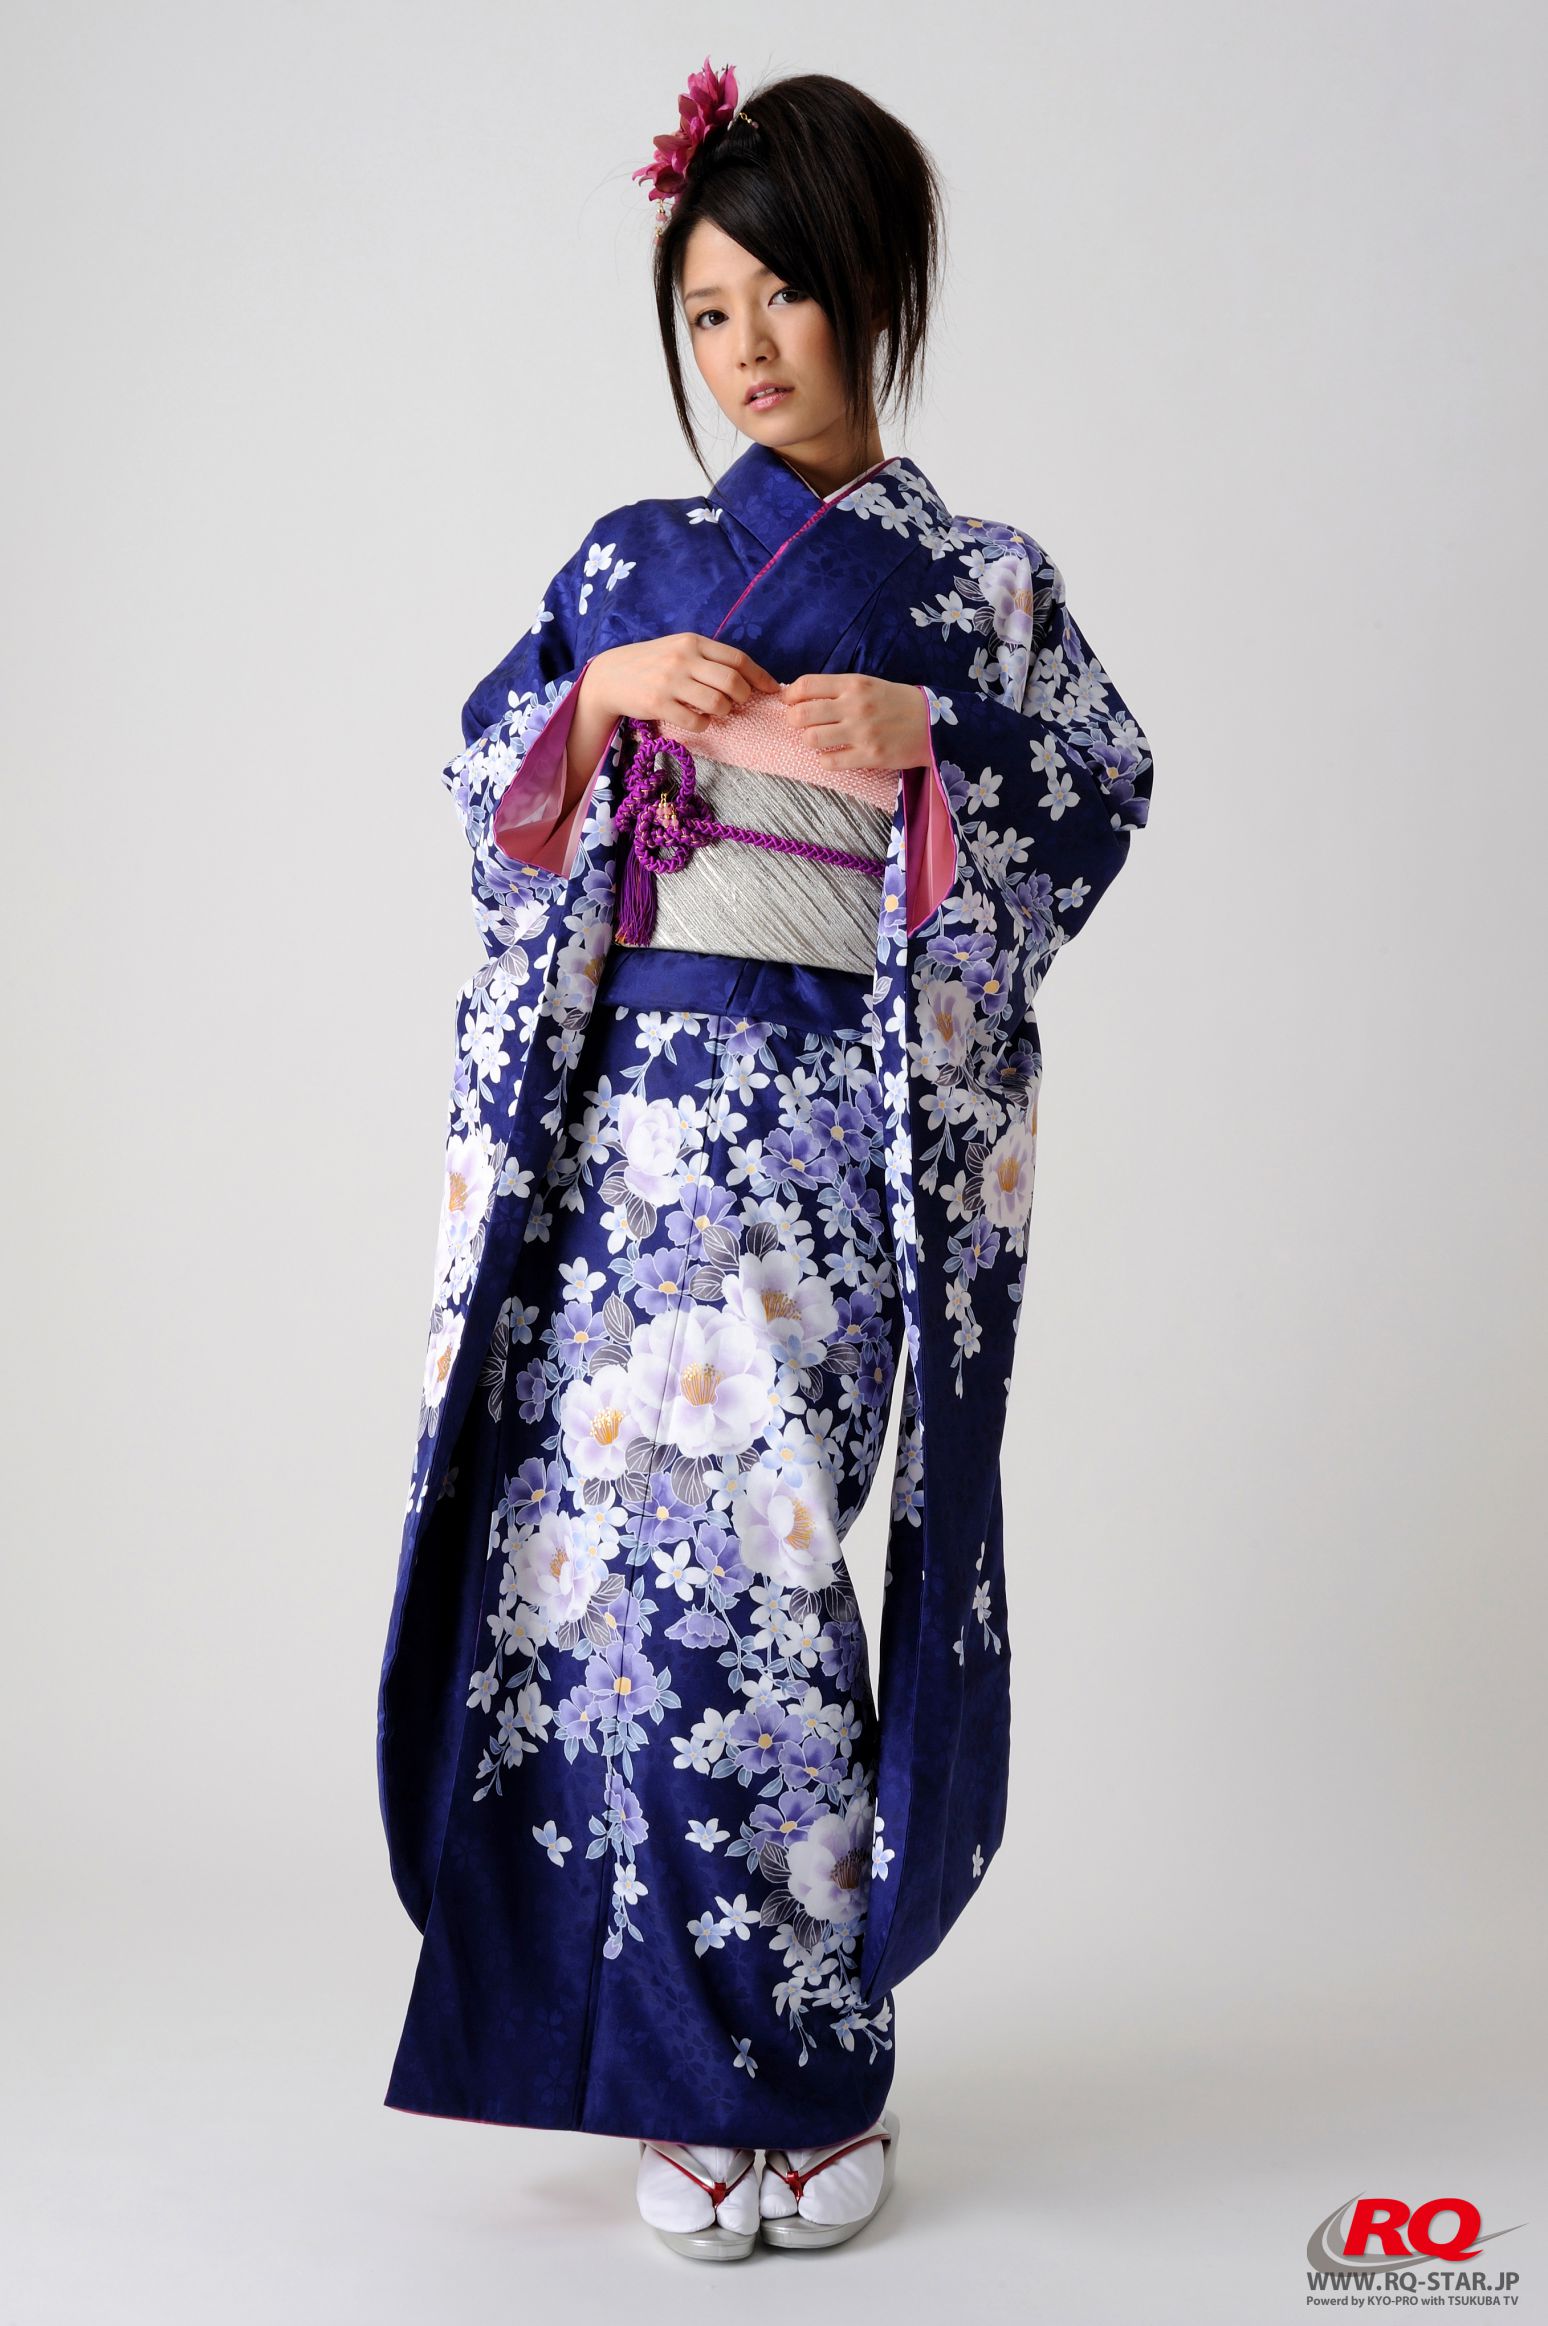 [RQ-STAR] NO.00068 古崎瞳 謹賀新年 Kimono – Happy New Year 和服系列74